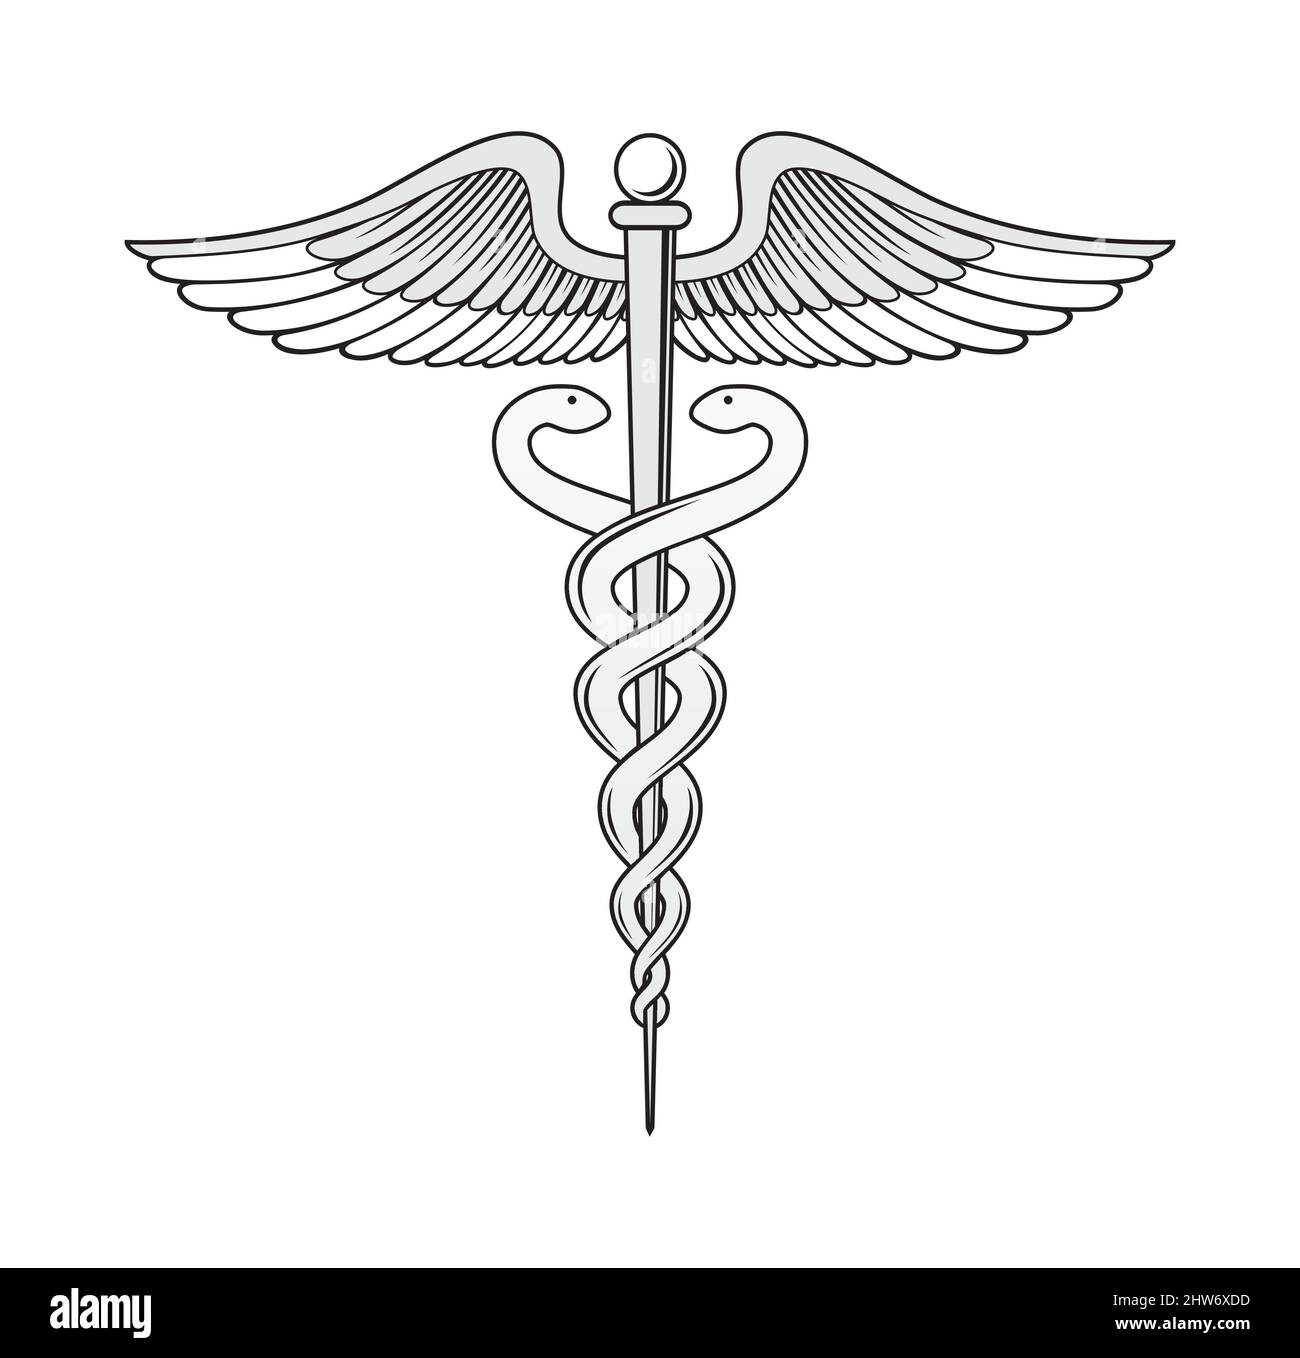 Medical caduceus symbol design illustration vector eps format , suitable  for your design needs, logo, illustration, animation, etc Stock Vector  Image & Art - Alamy